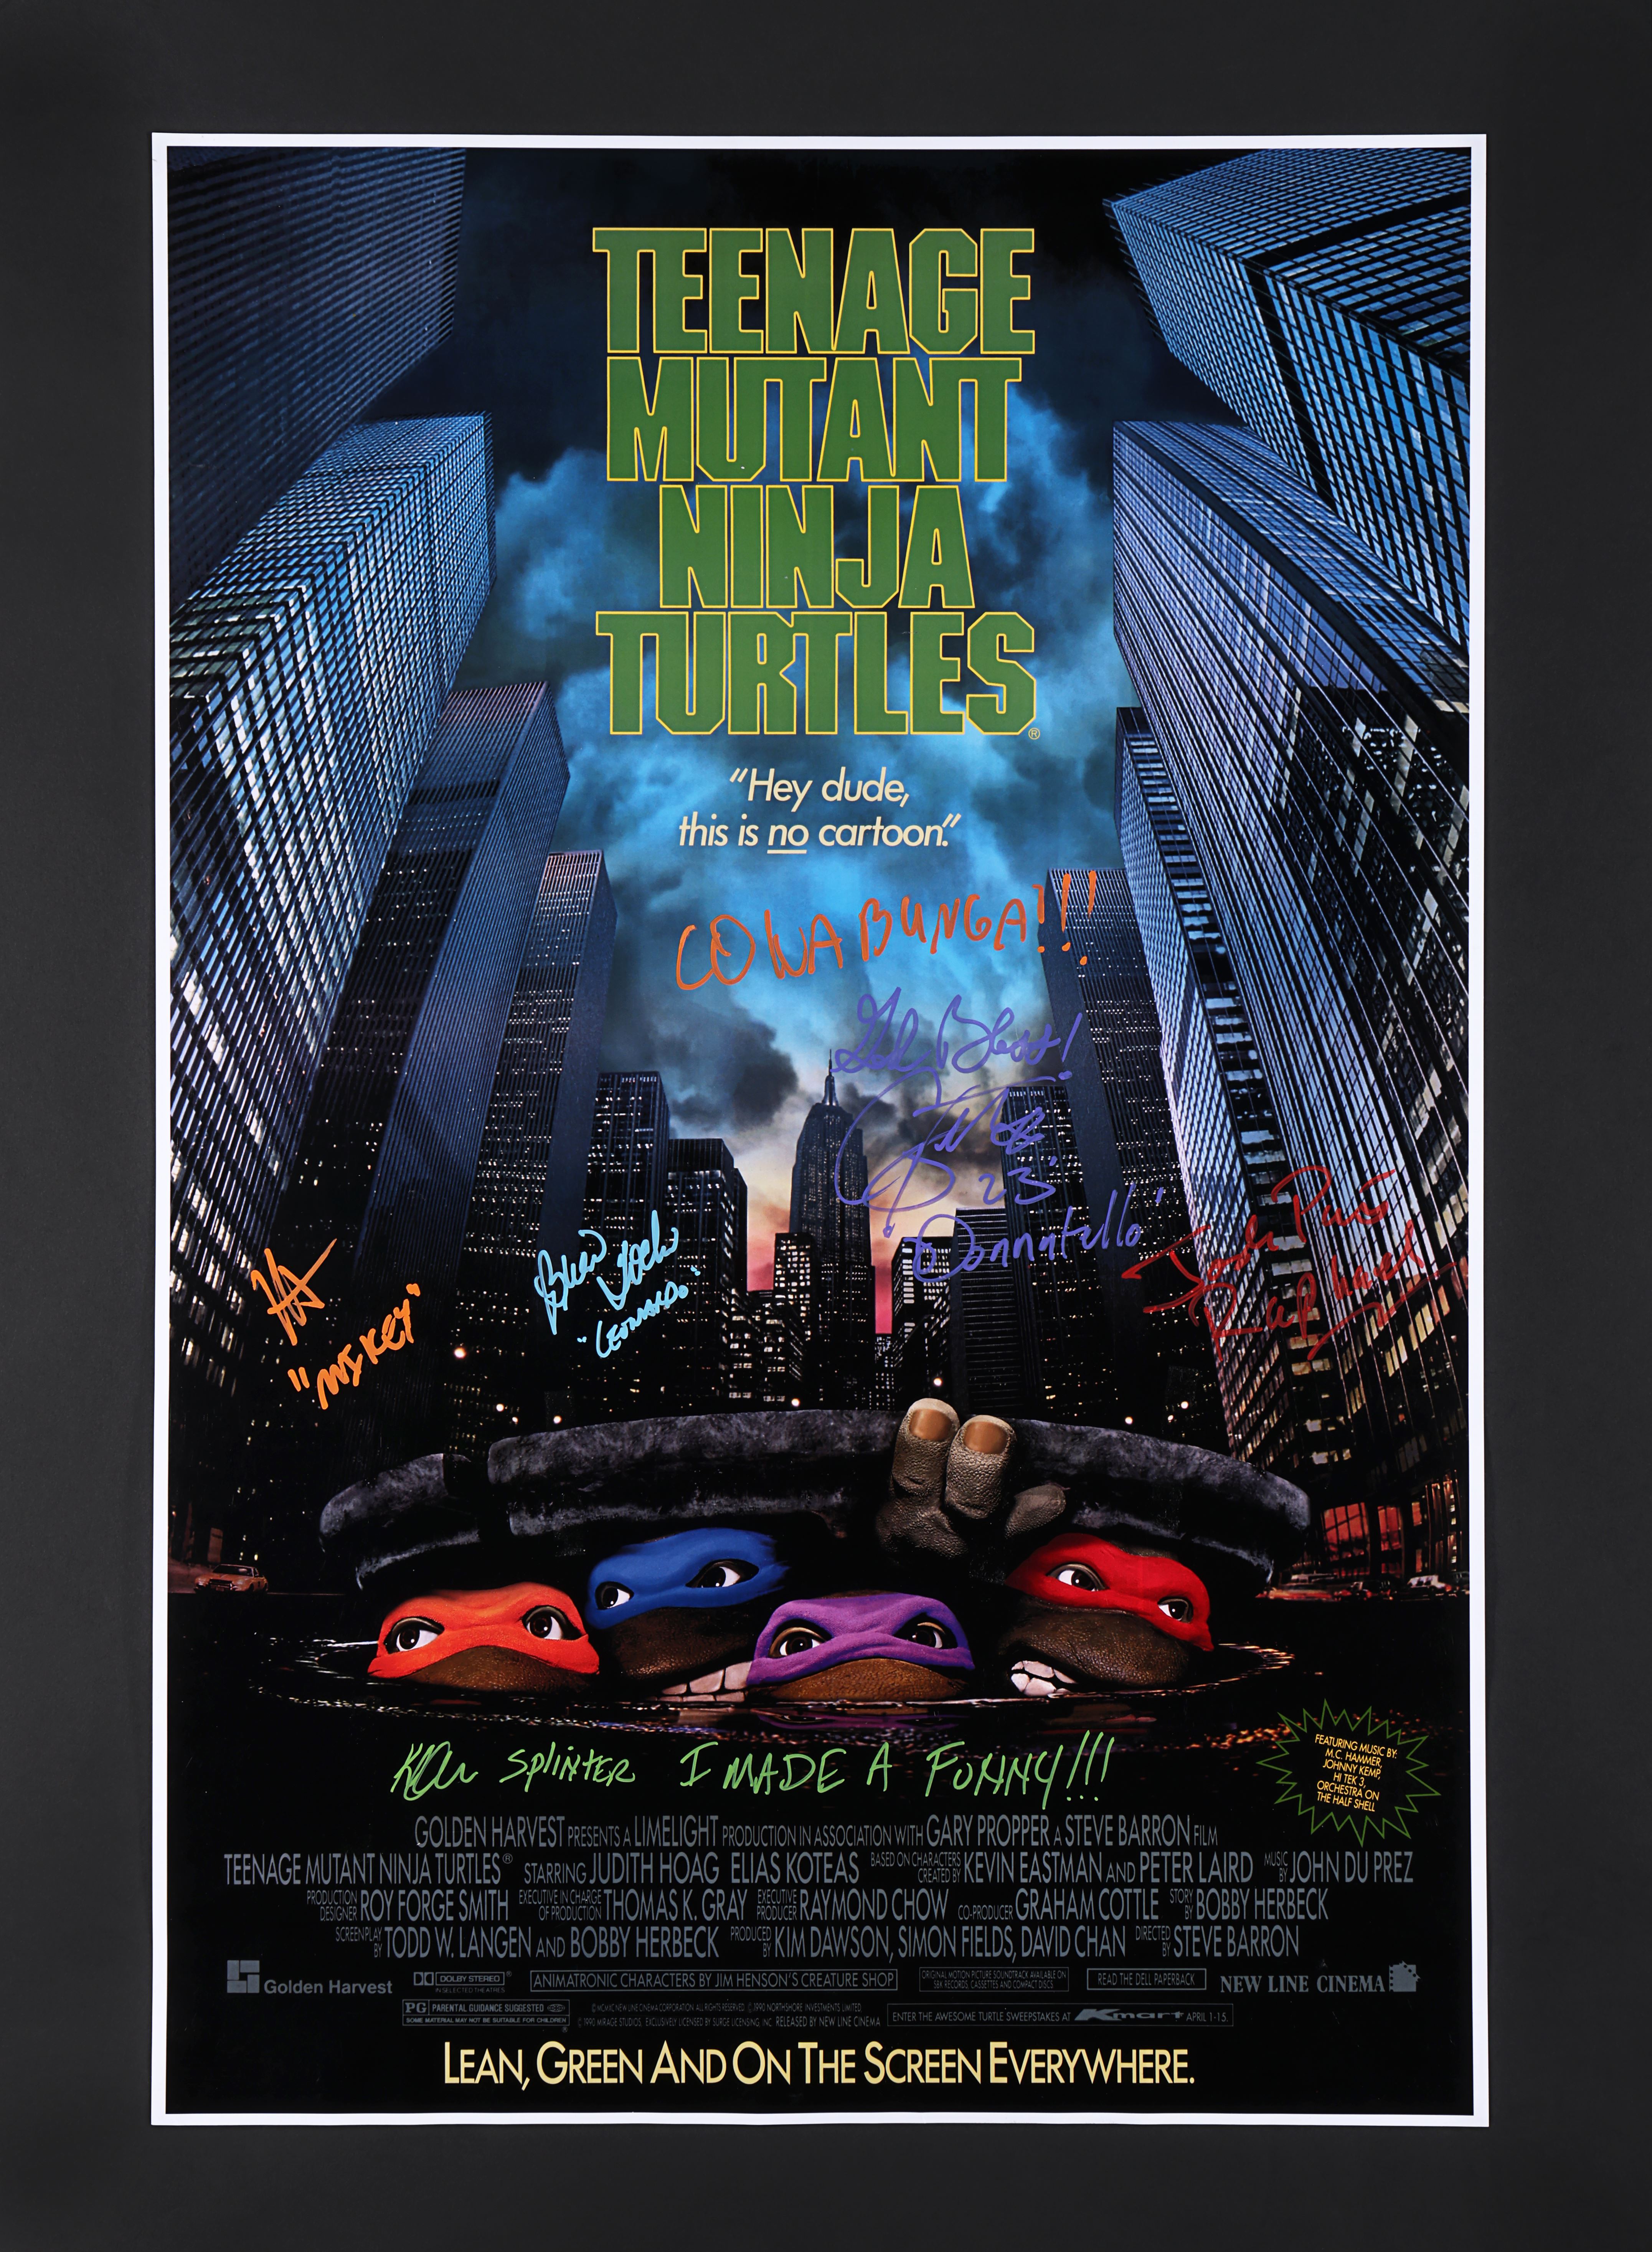 TEENAGE MUTANT NINJA TURTLES (1990) - Corey Feldman, Josh Pais, Brian Tochi, Robbie Rist and Kevin C